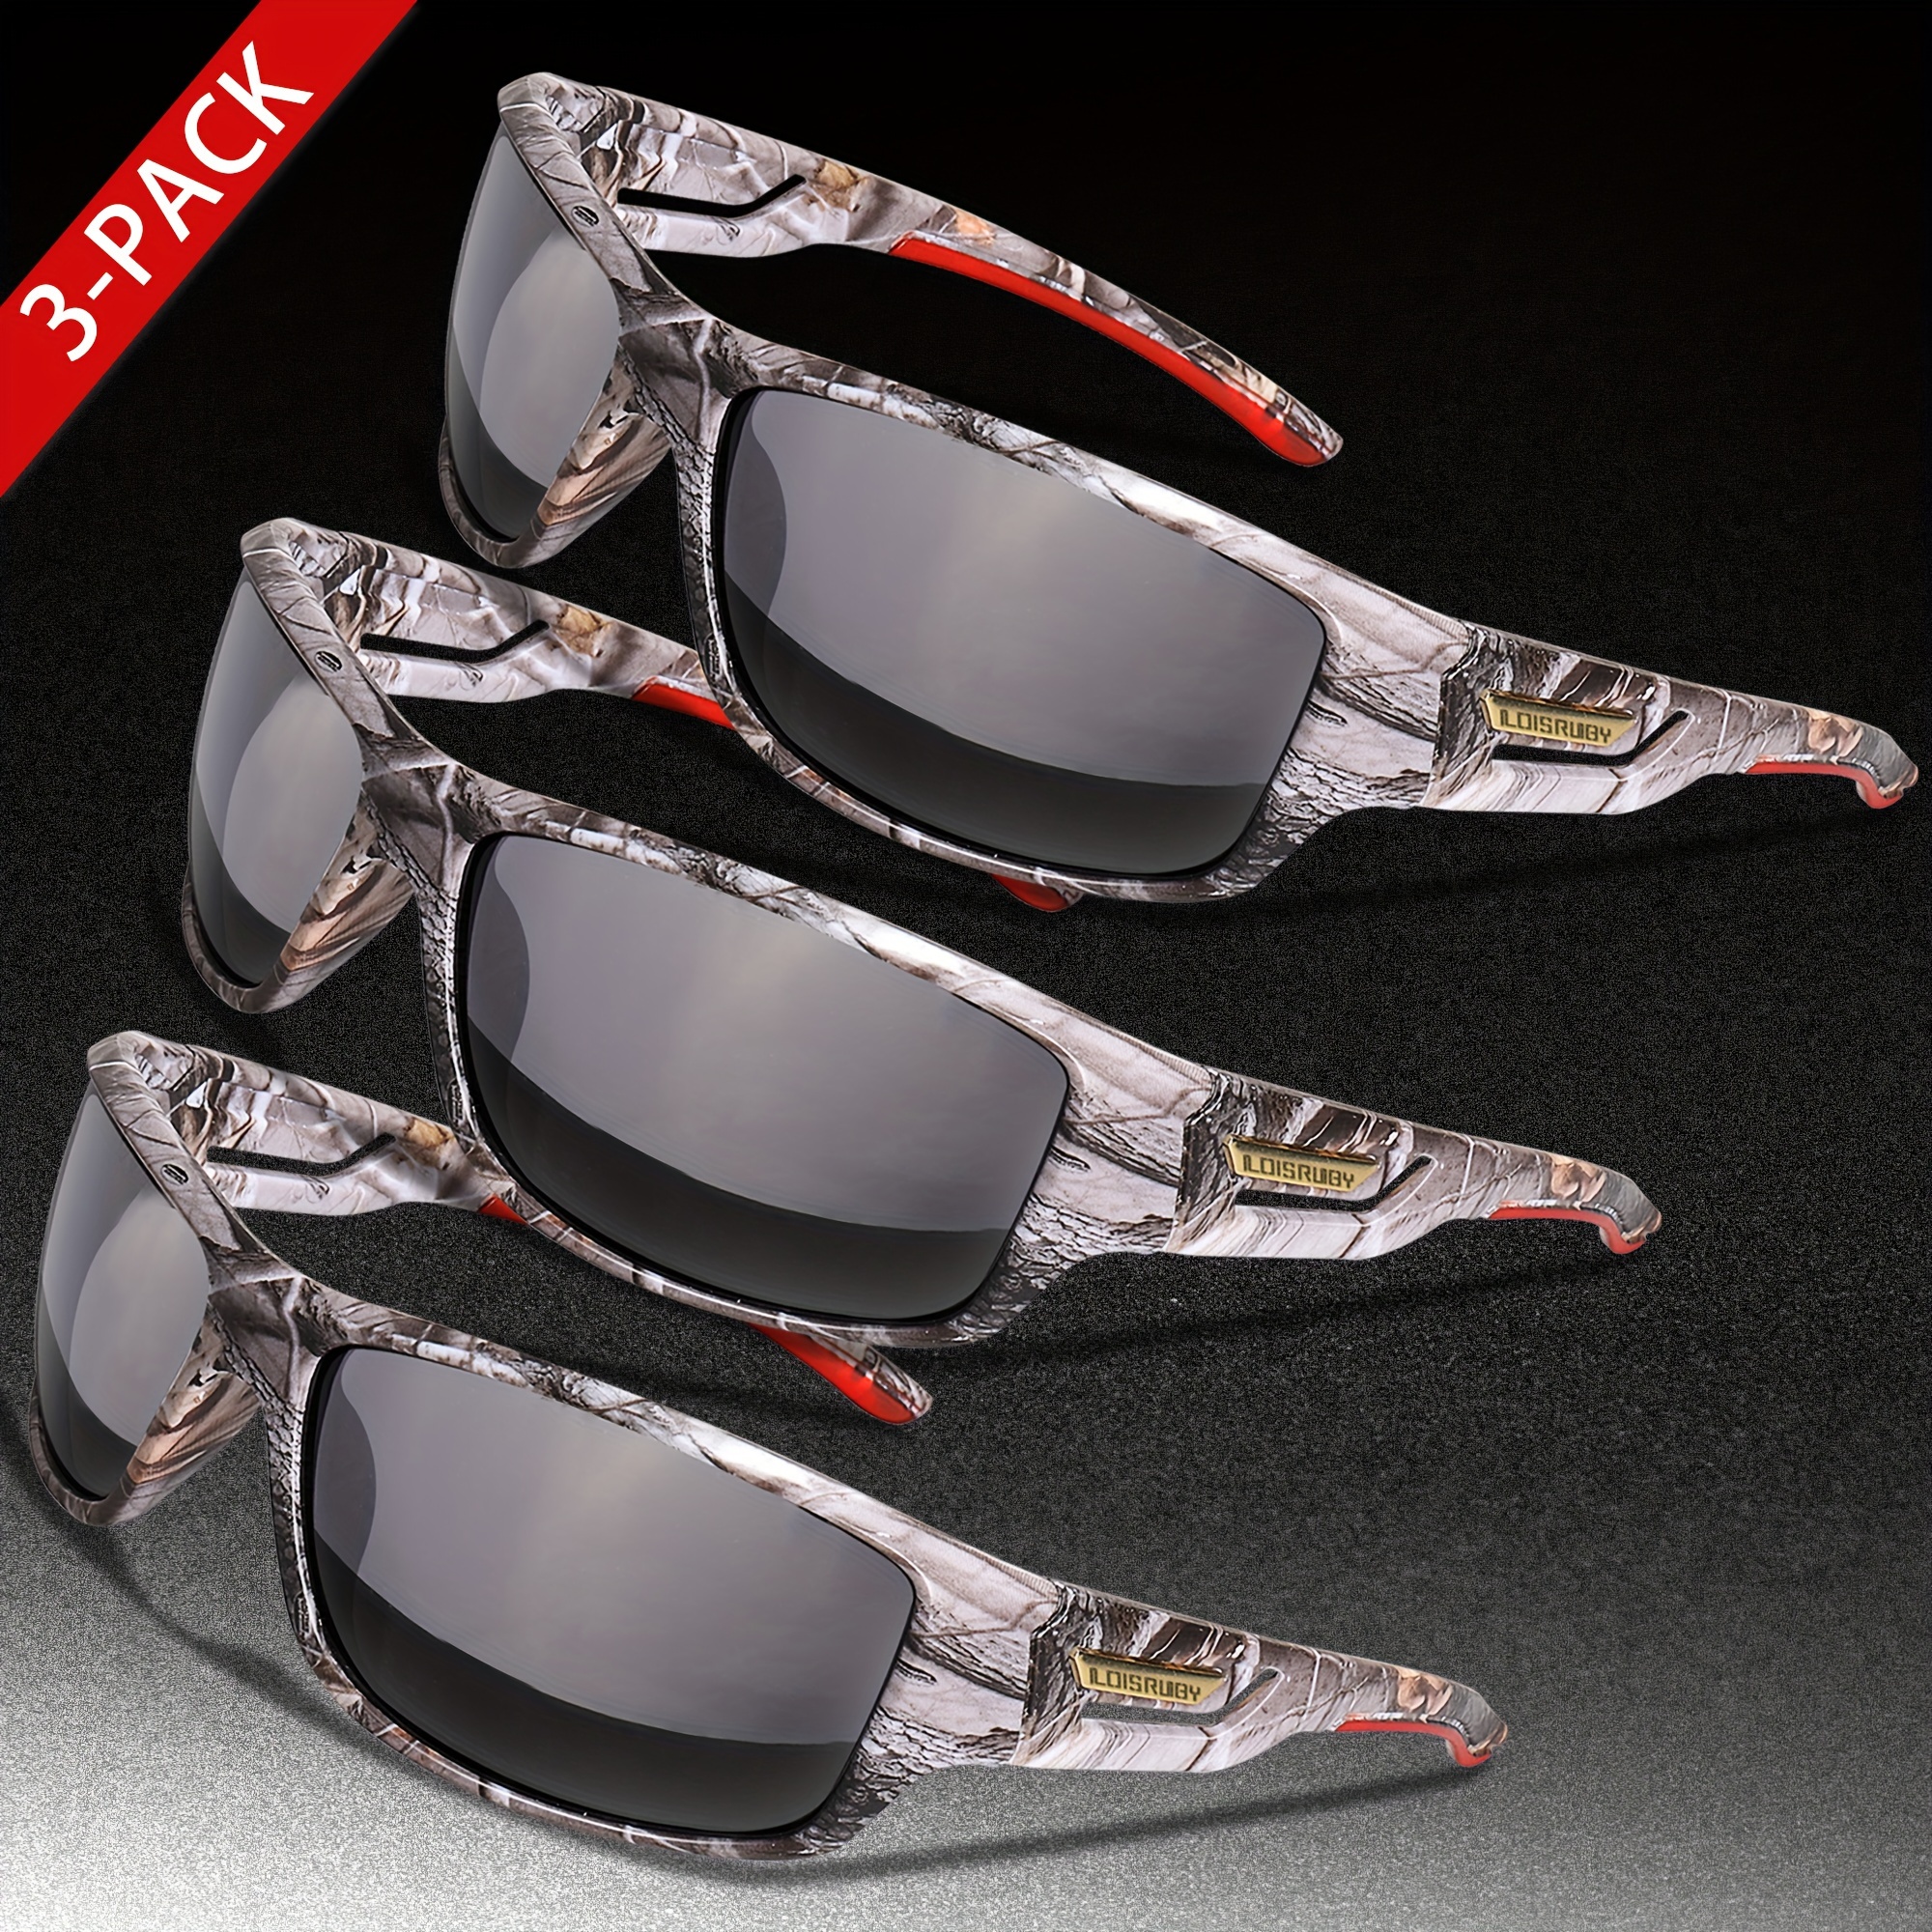 polarized mens sunglasses sport - Buy polarized mens sunglasses sport with  free shipping on AliExpress